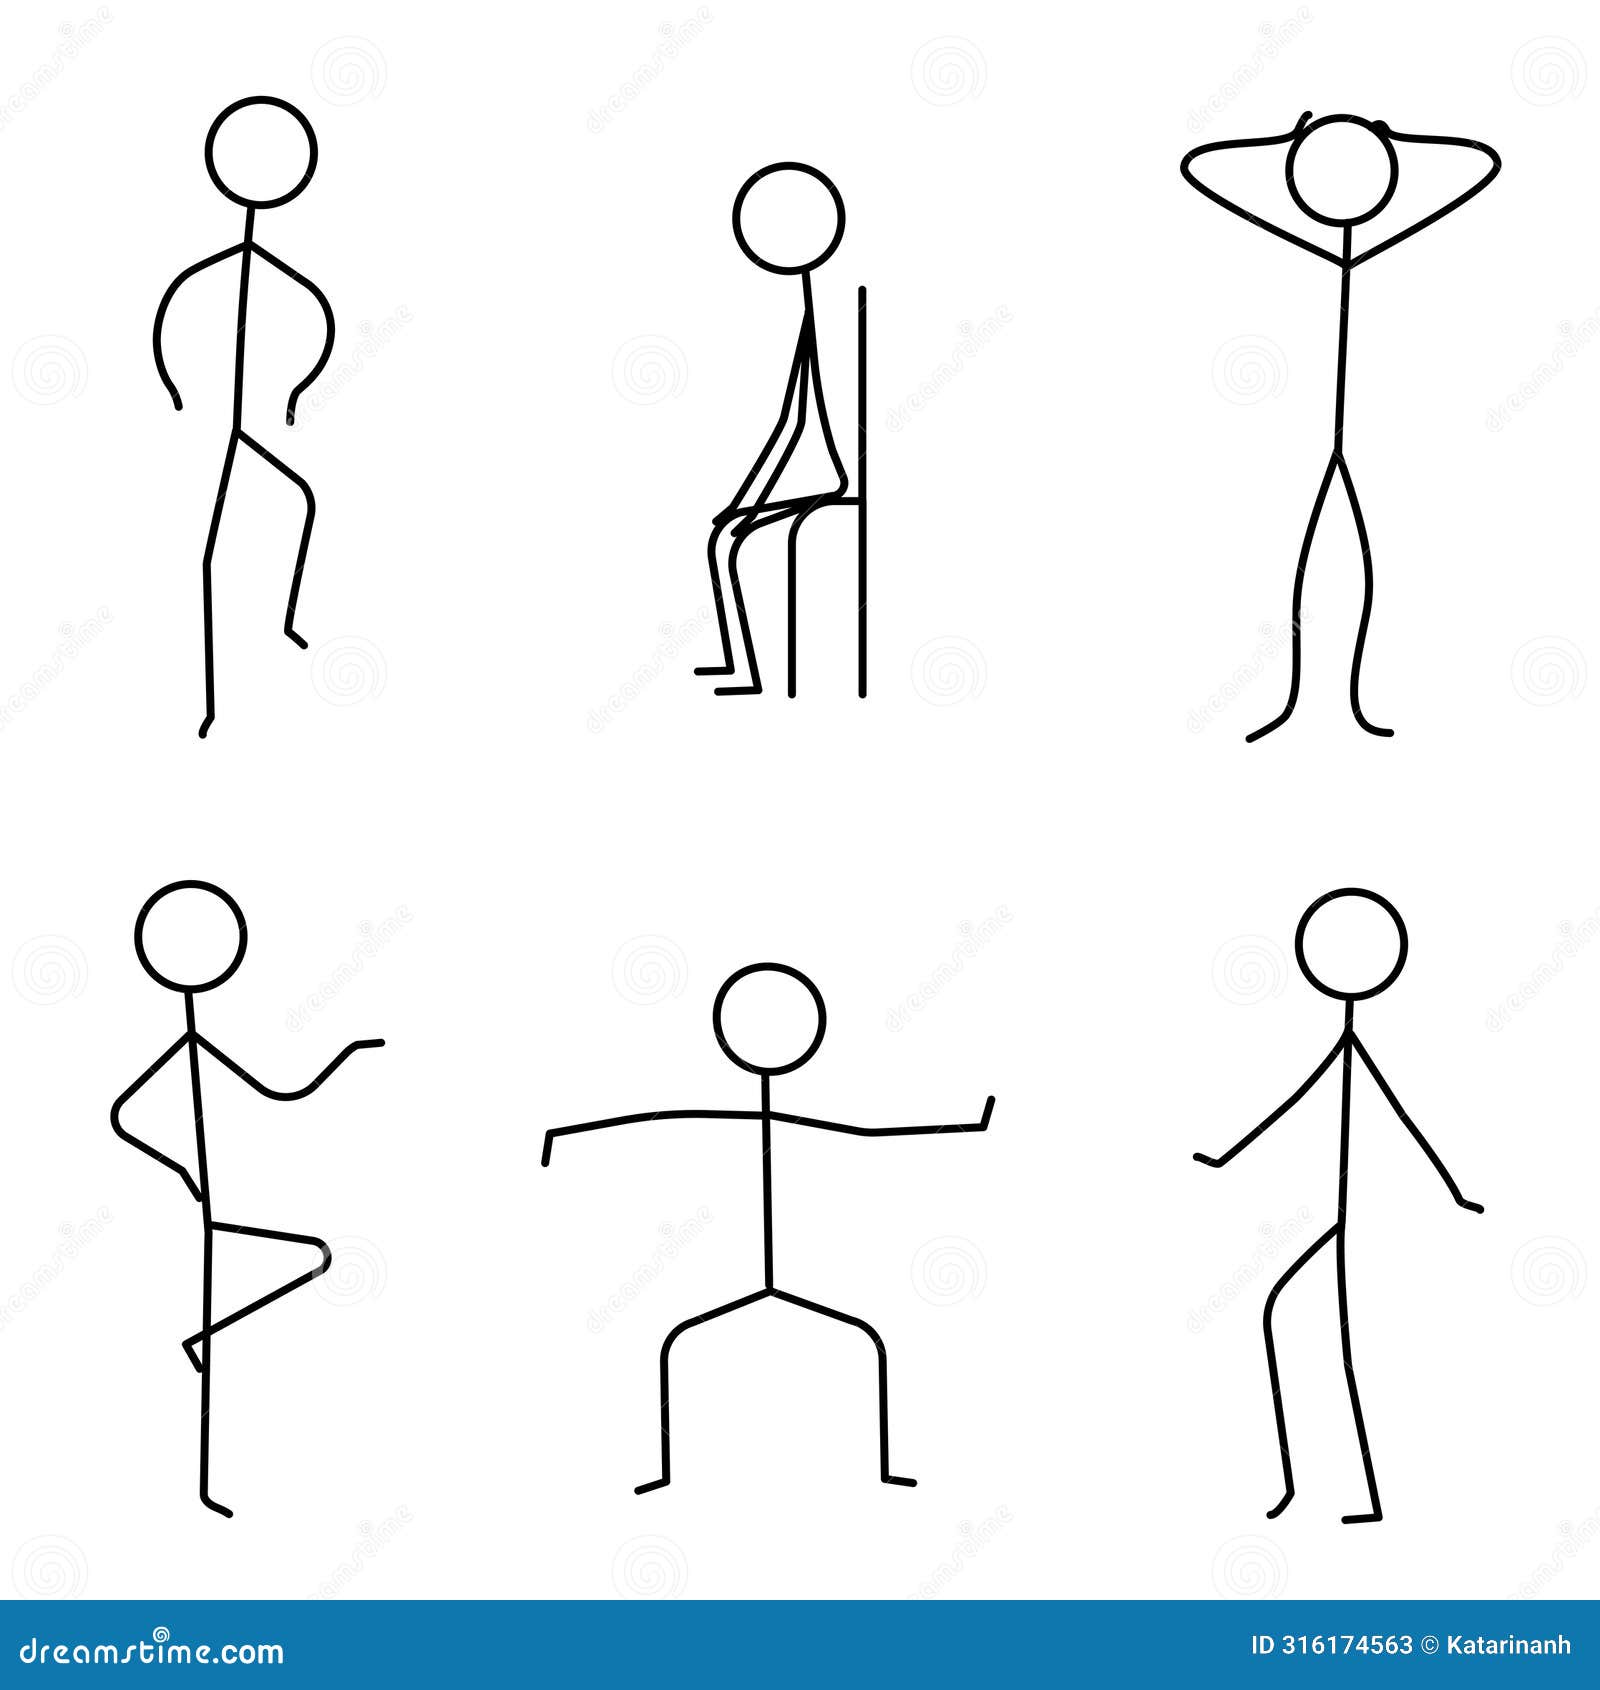 set of stick figures. presentation stick men. different movements of the stick figures